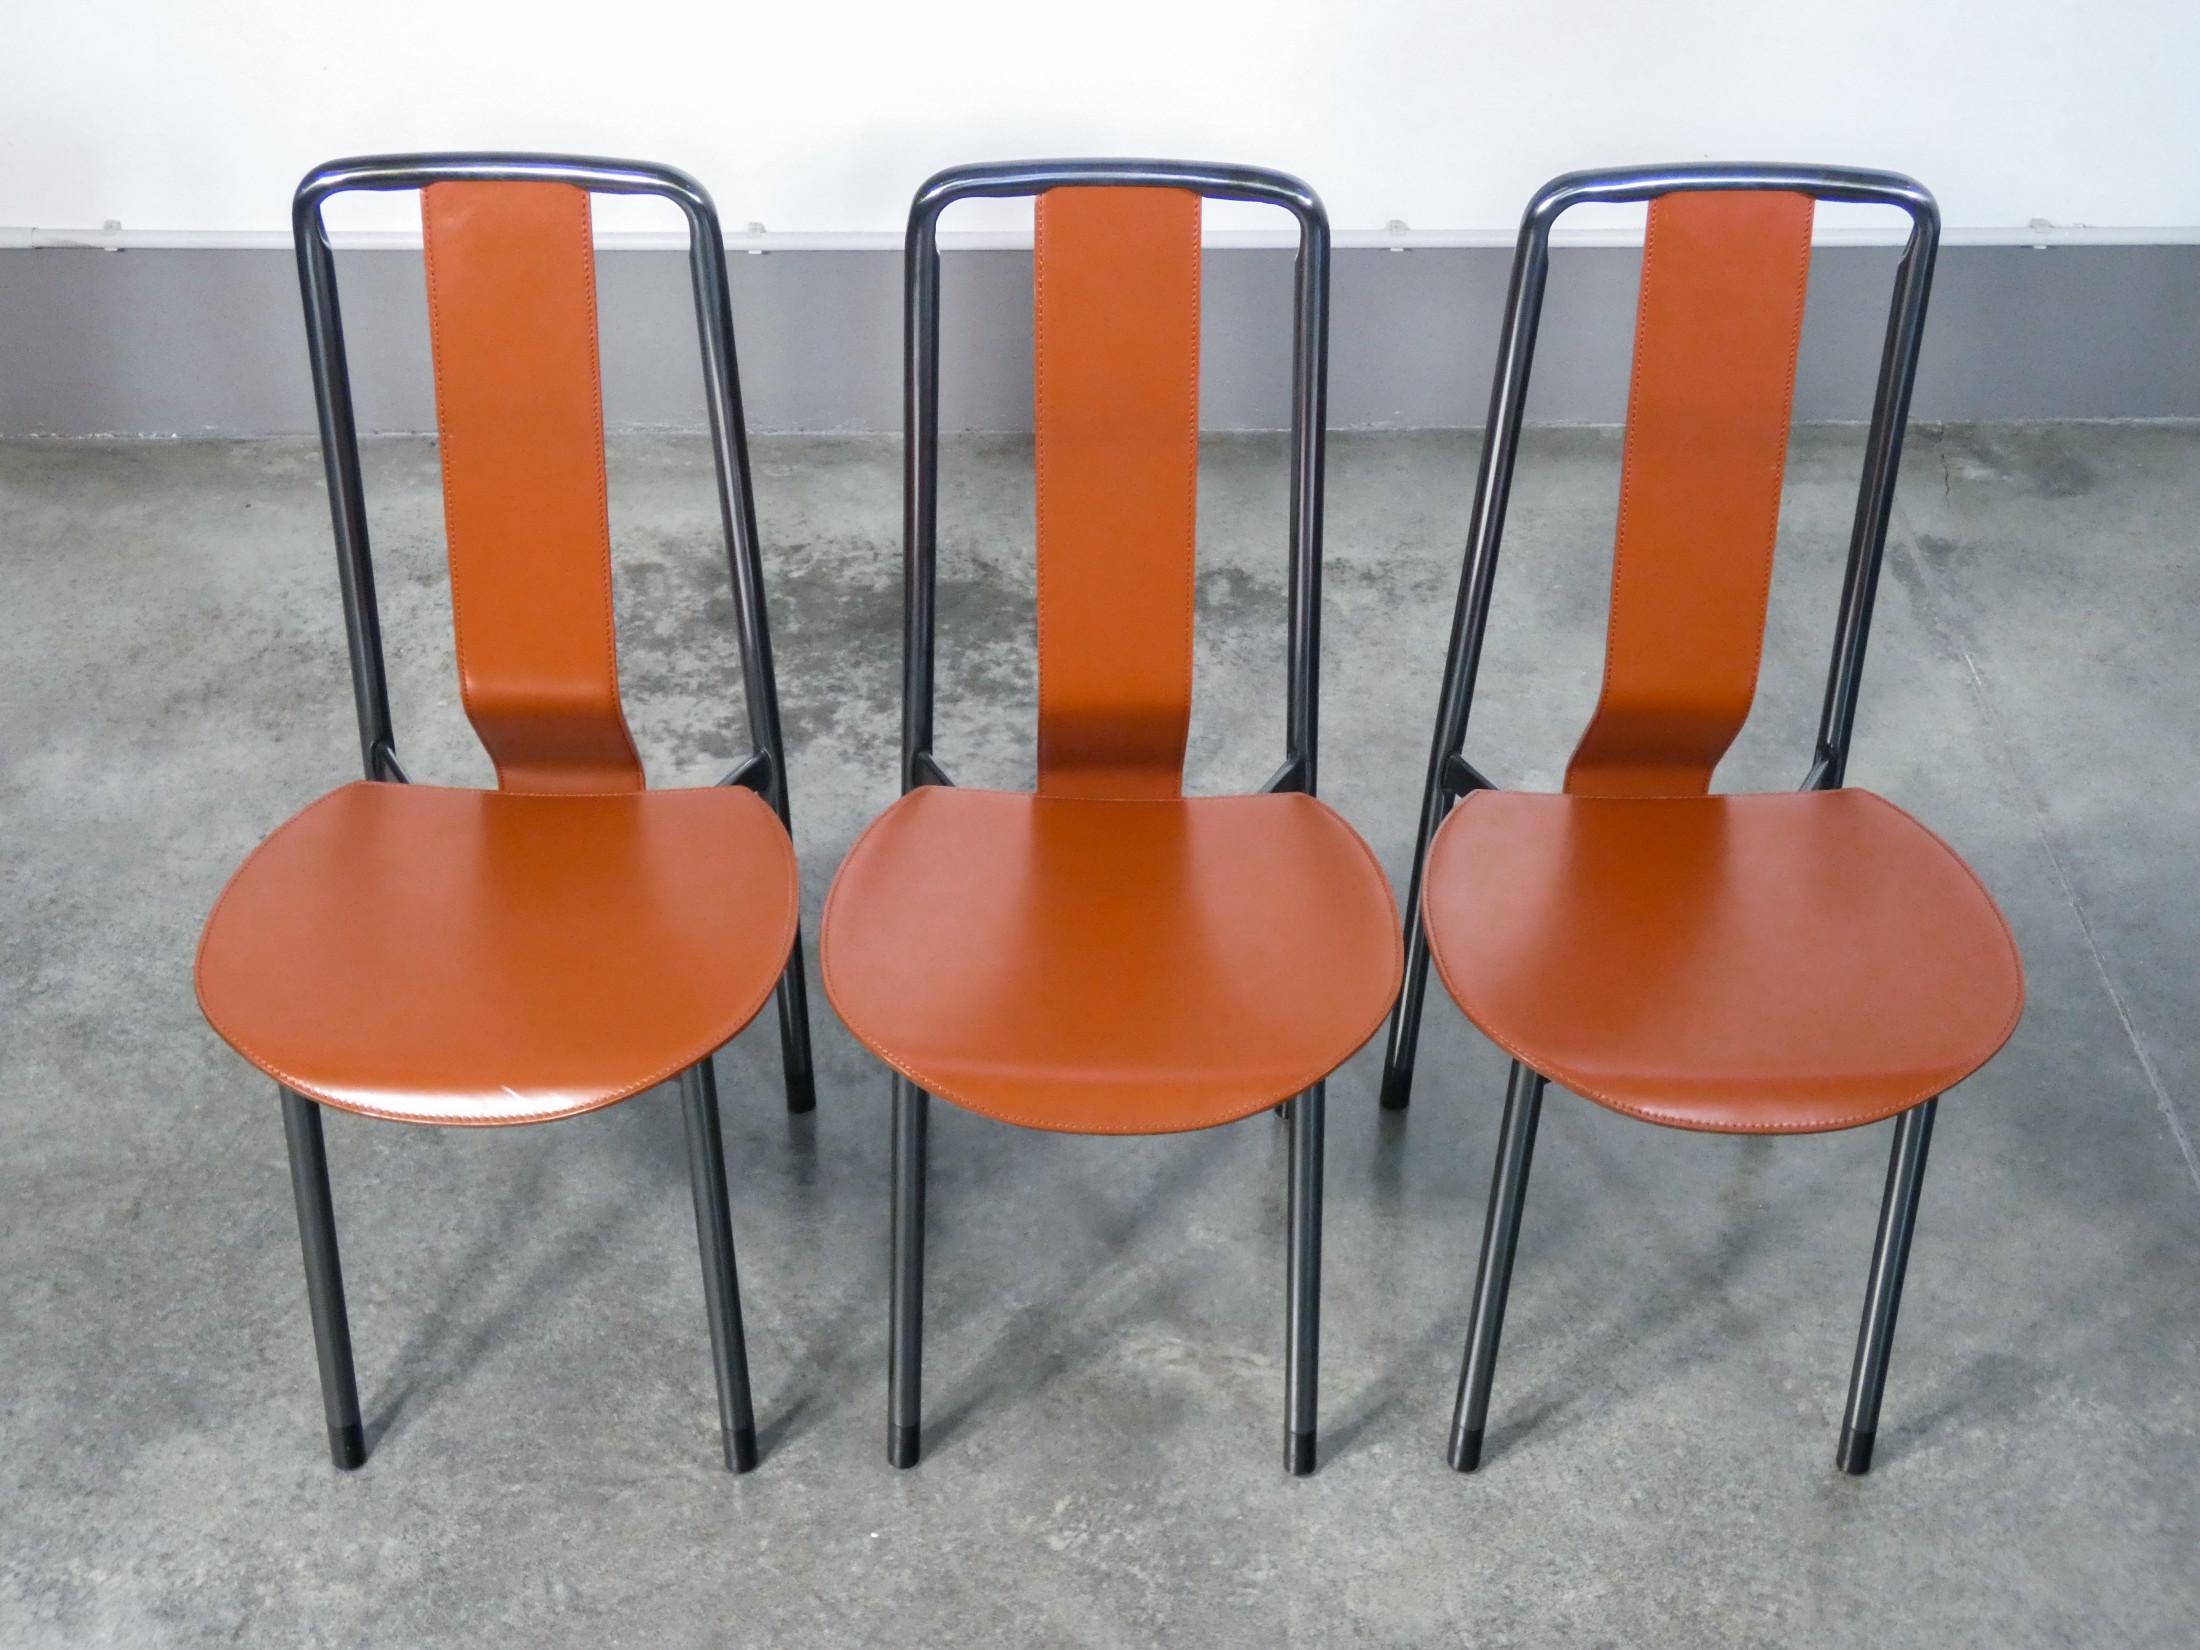 Steel Set of Six Irma Chairs, Designed by Achille Castiglioni for Zanotta. Italy, 1979